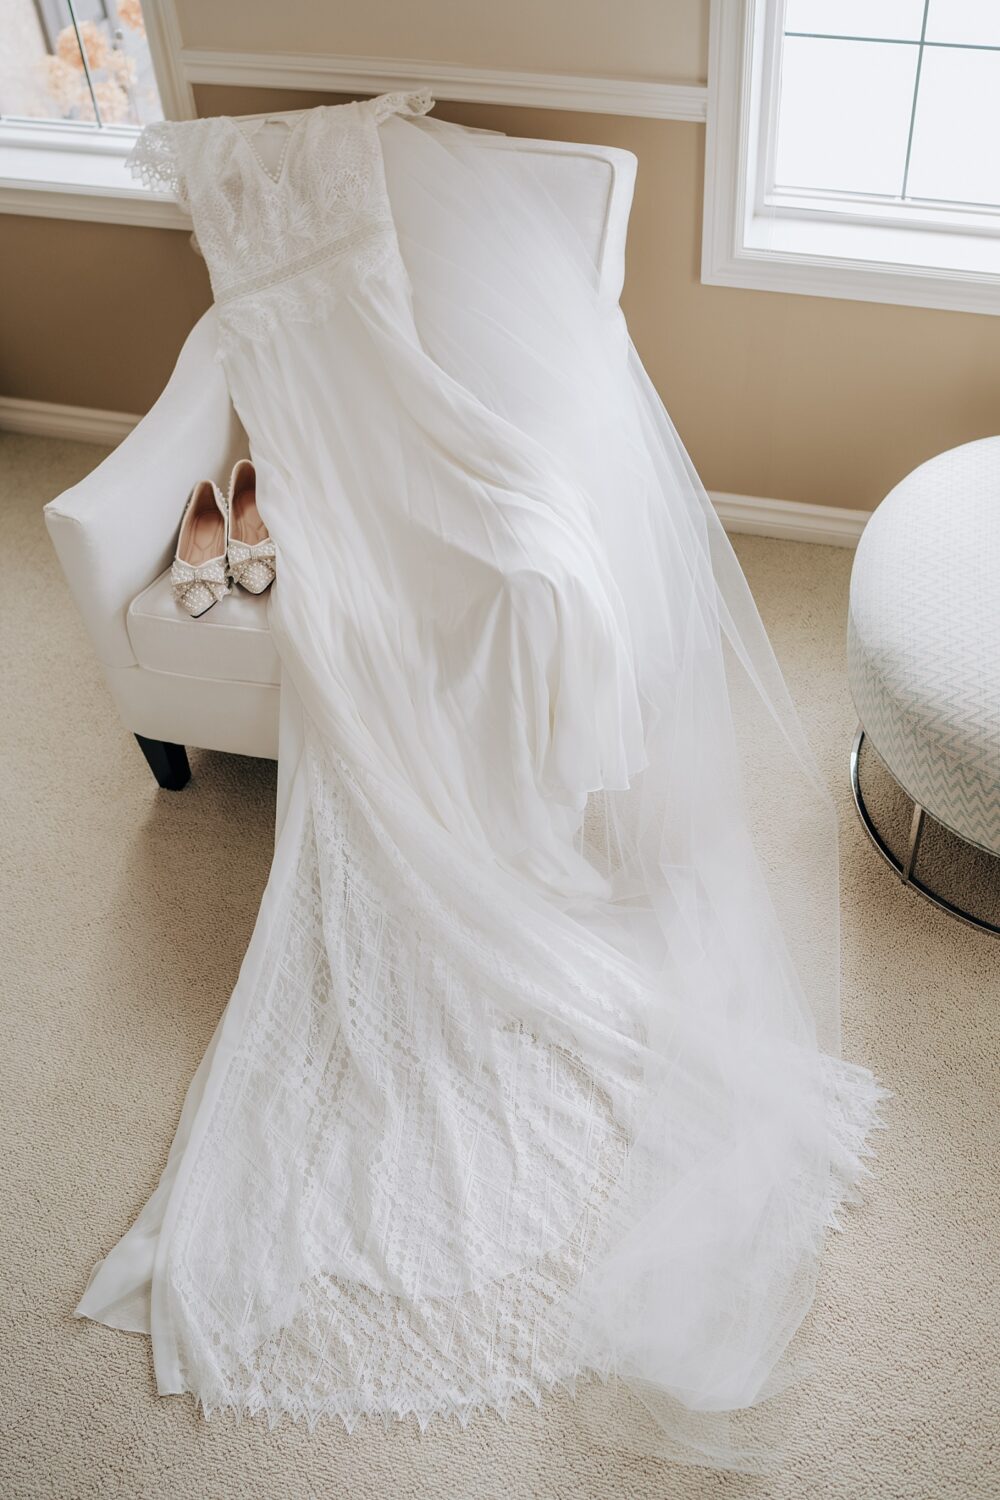 Edmonton wedding photographer detail photo of wedding dress and wedding shoes